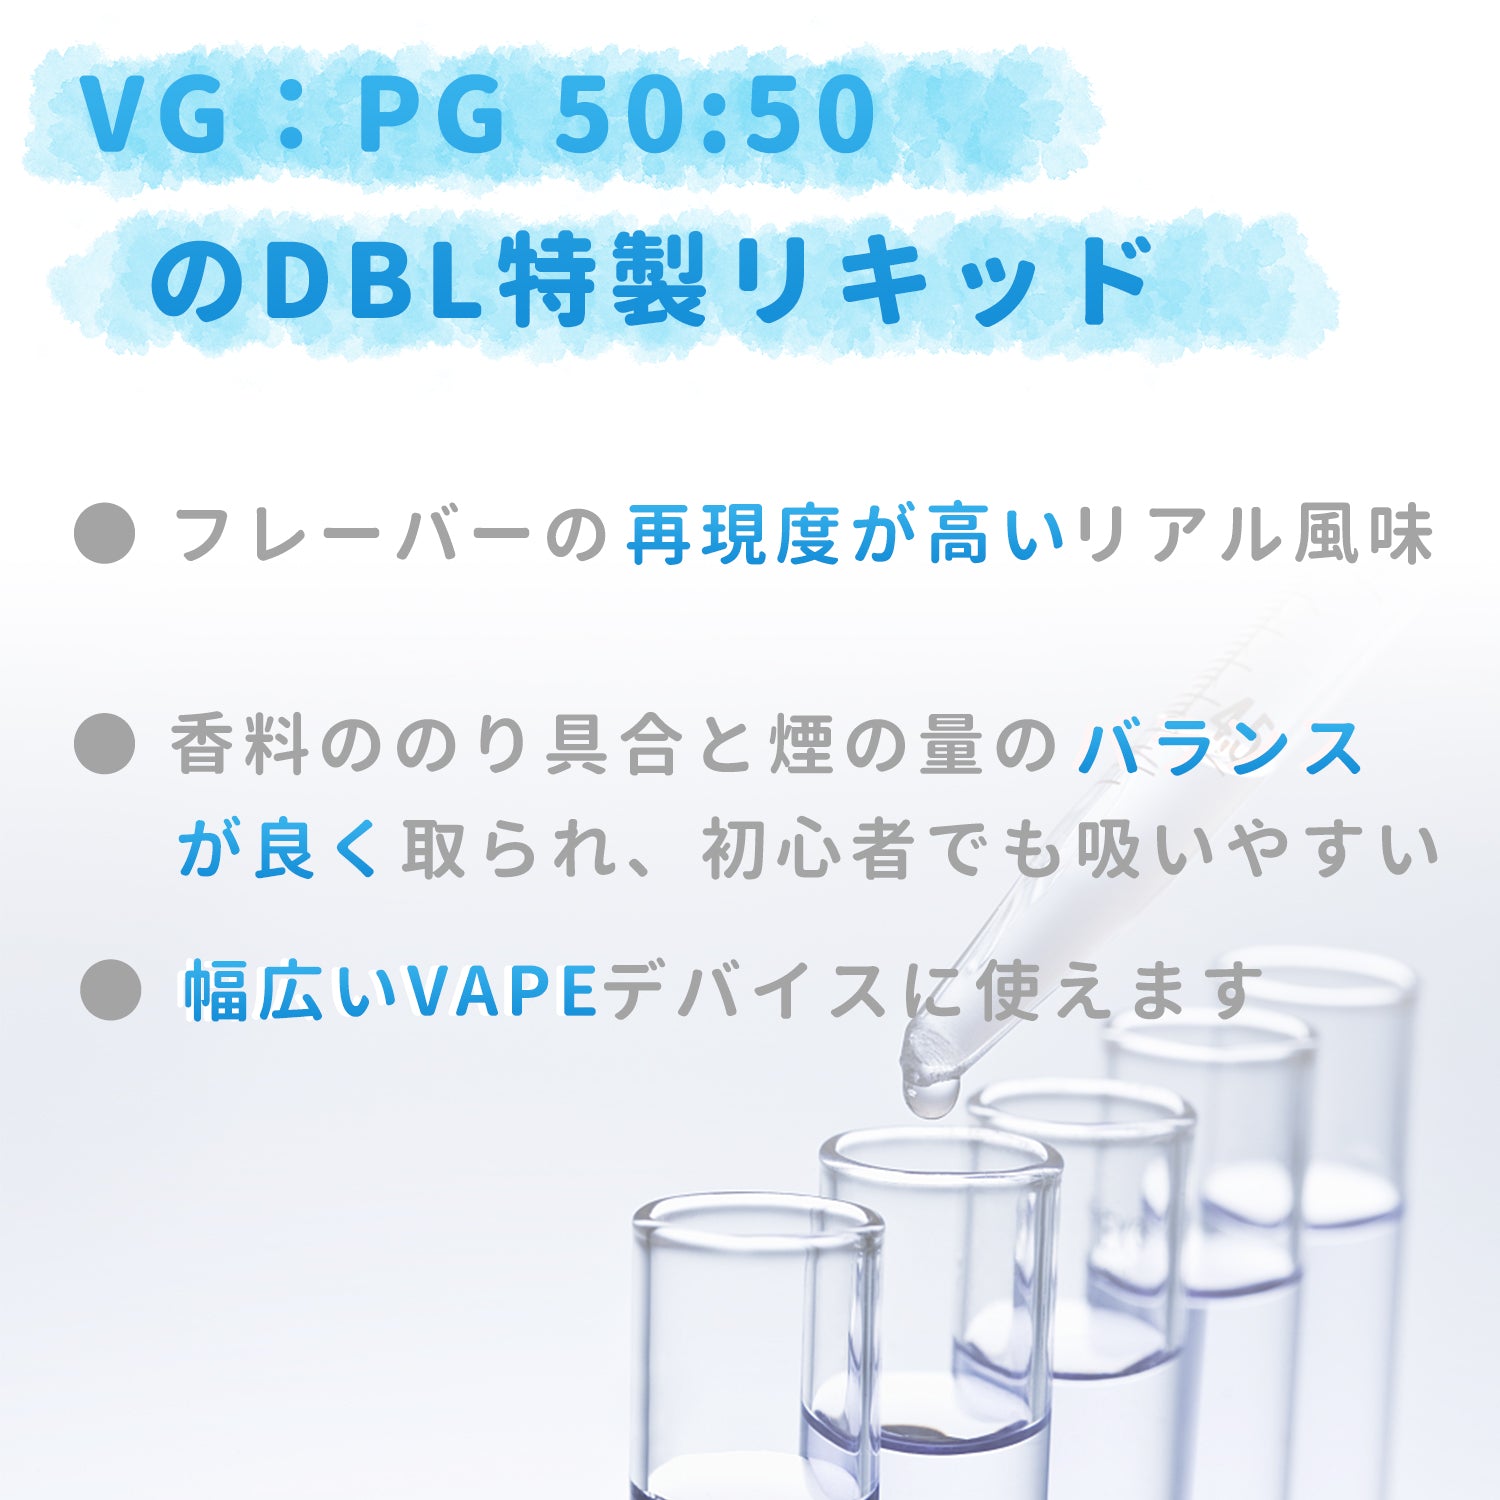 DBL Electronic cigarette liquid 120ml VAPE LIQUID (Supermint)